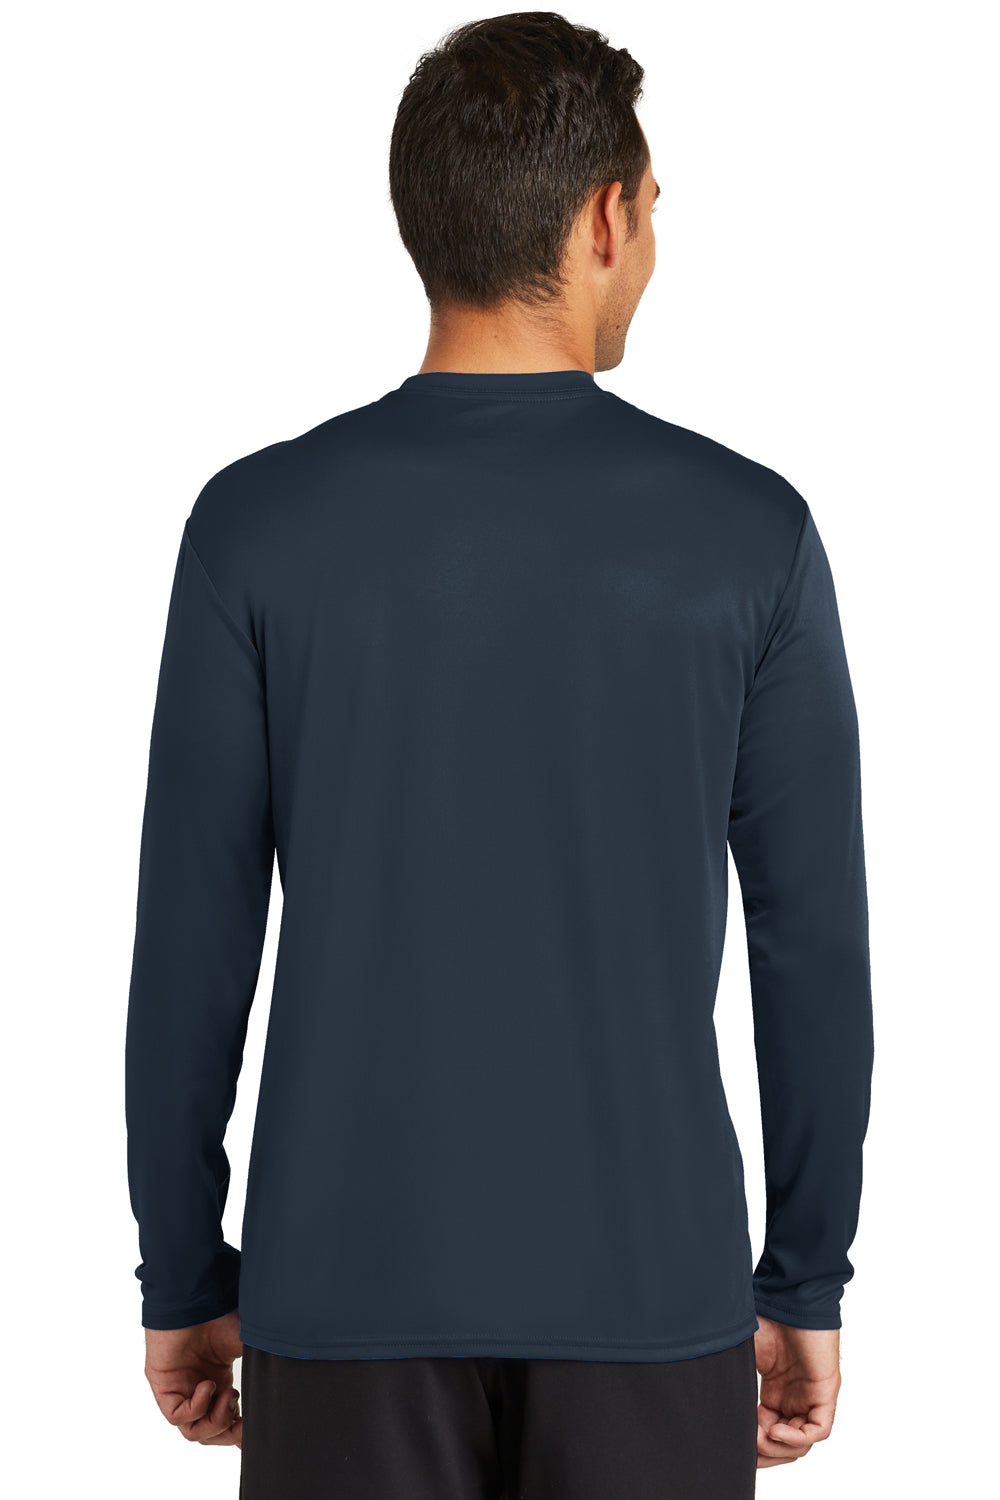 Port & Company PC380LS Mens Dry Zone Performance Moisture Wicking Long Sleeve Crewneck T-Shirt Navy Blue Back